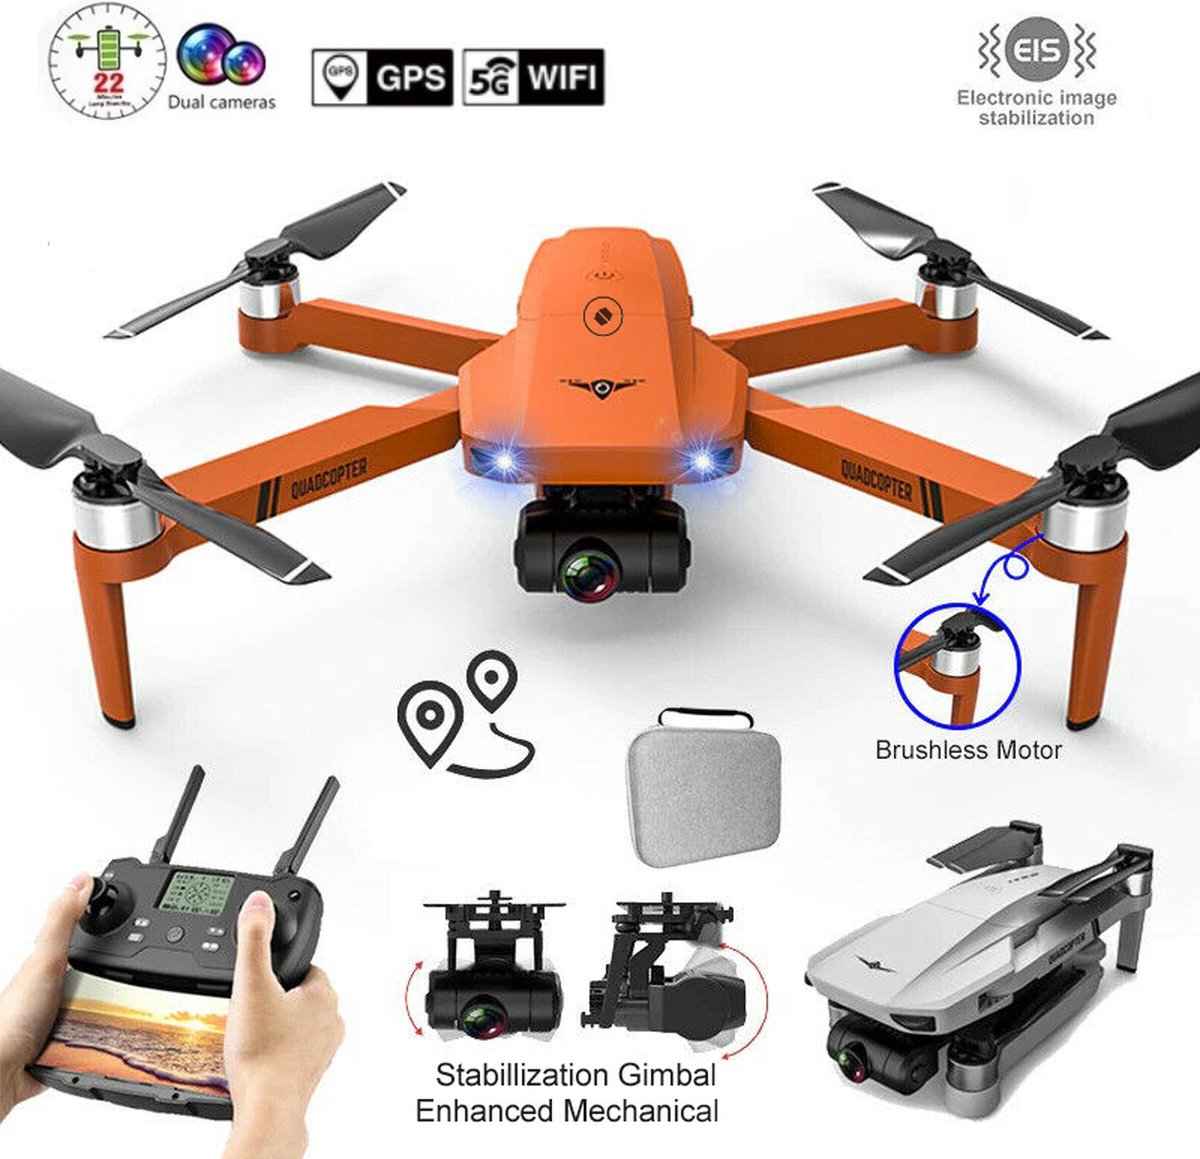 LUXWALLET Libra4 – FPV Drone Quadcopter - 25.2Km/h – WiFI GPS 1.2 KM – 2-As Gimbal - Full HD Camera - Oranje